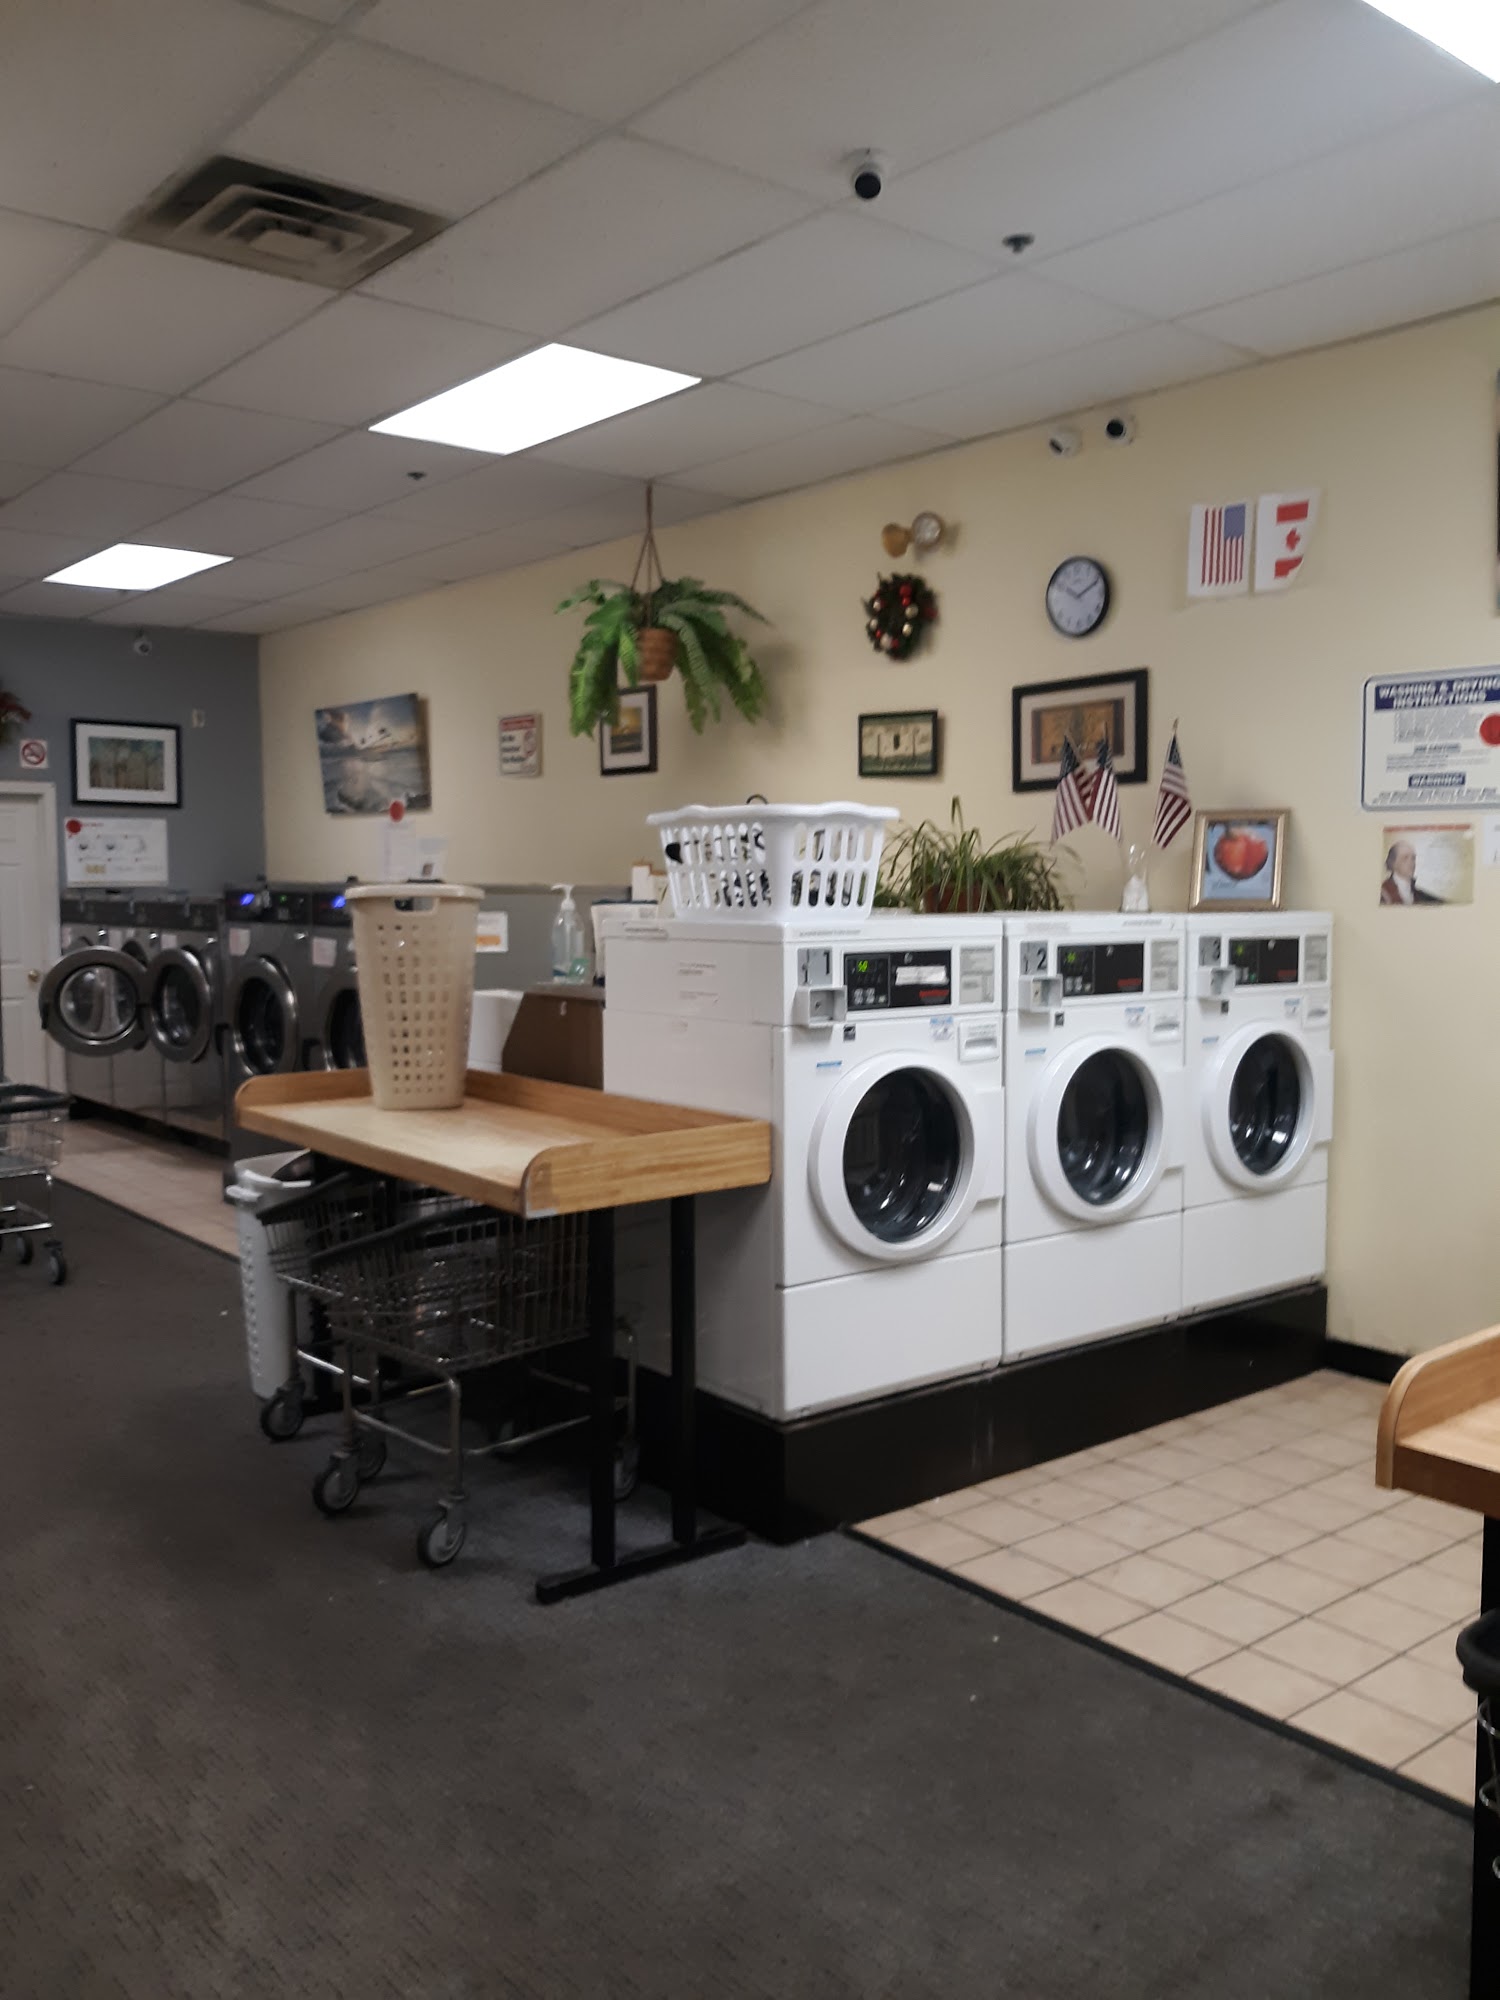 Scarborough Laundromat